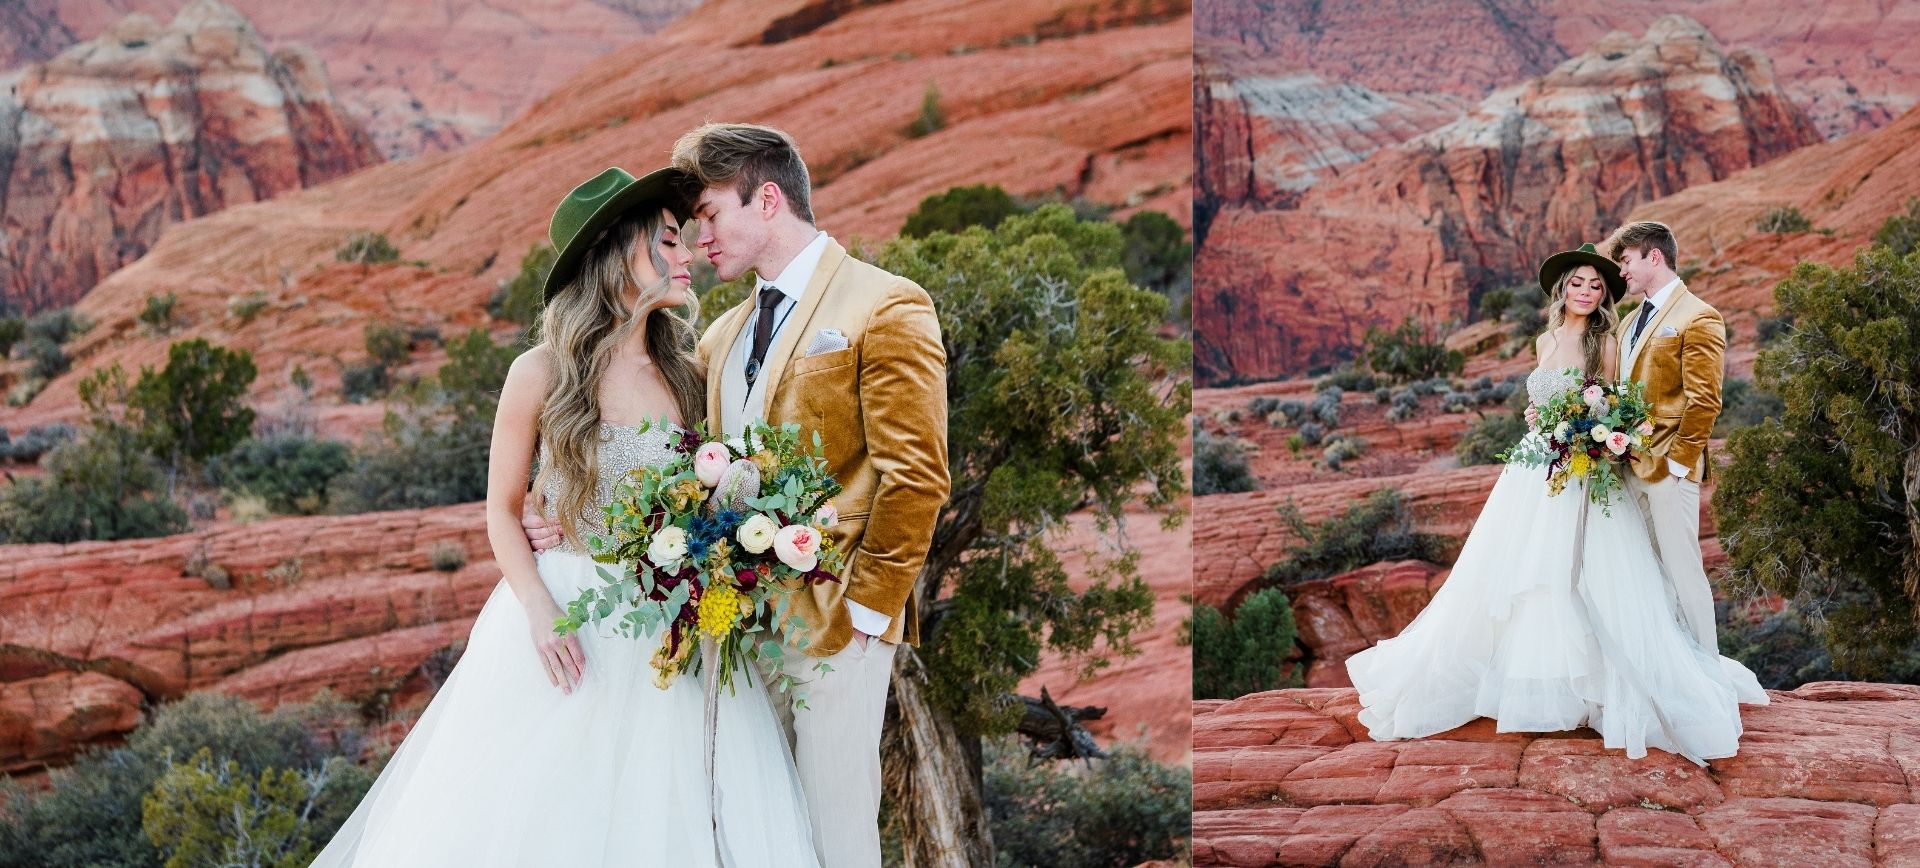 hjort Gavmild krise Utah Elopement at Red Rock - Adventure Wedding